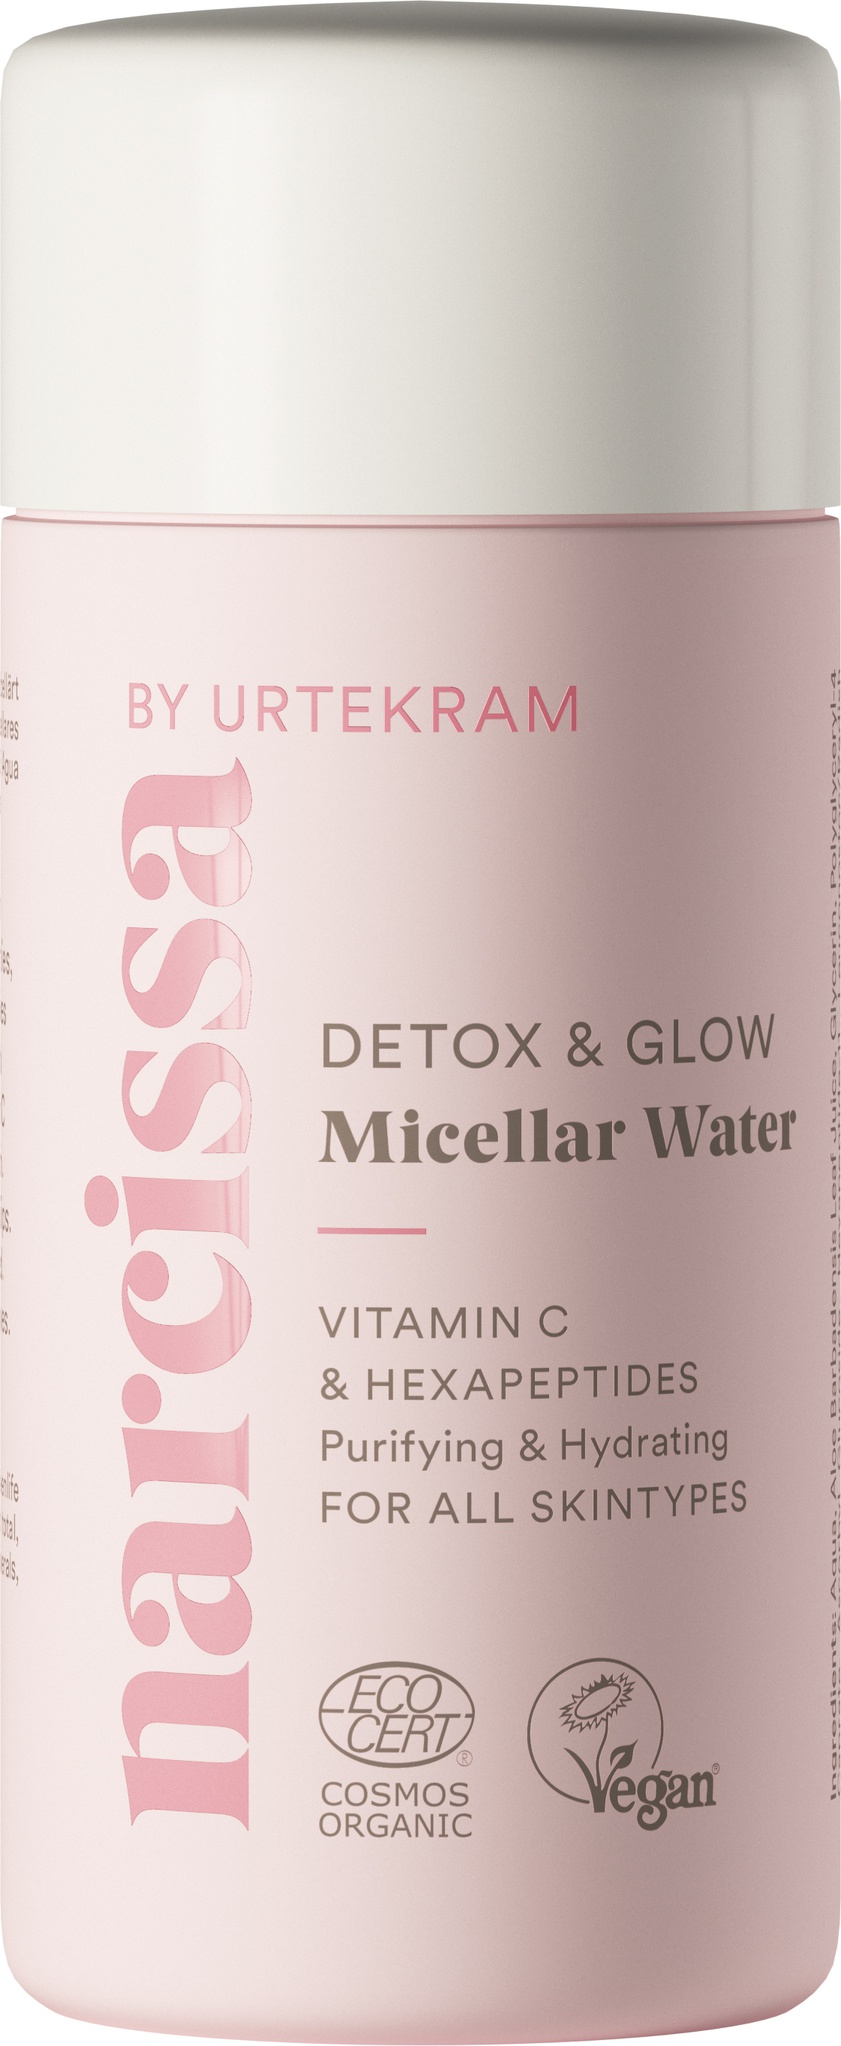 Narcissa by Urtecram Detox & Glow Micellar Water